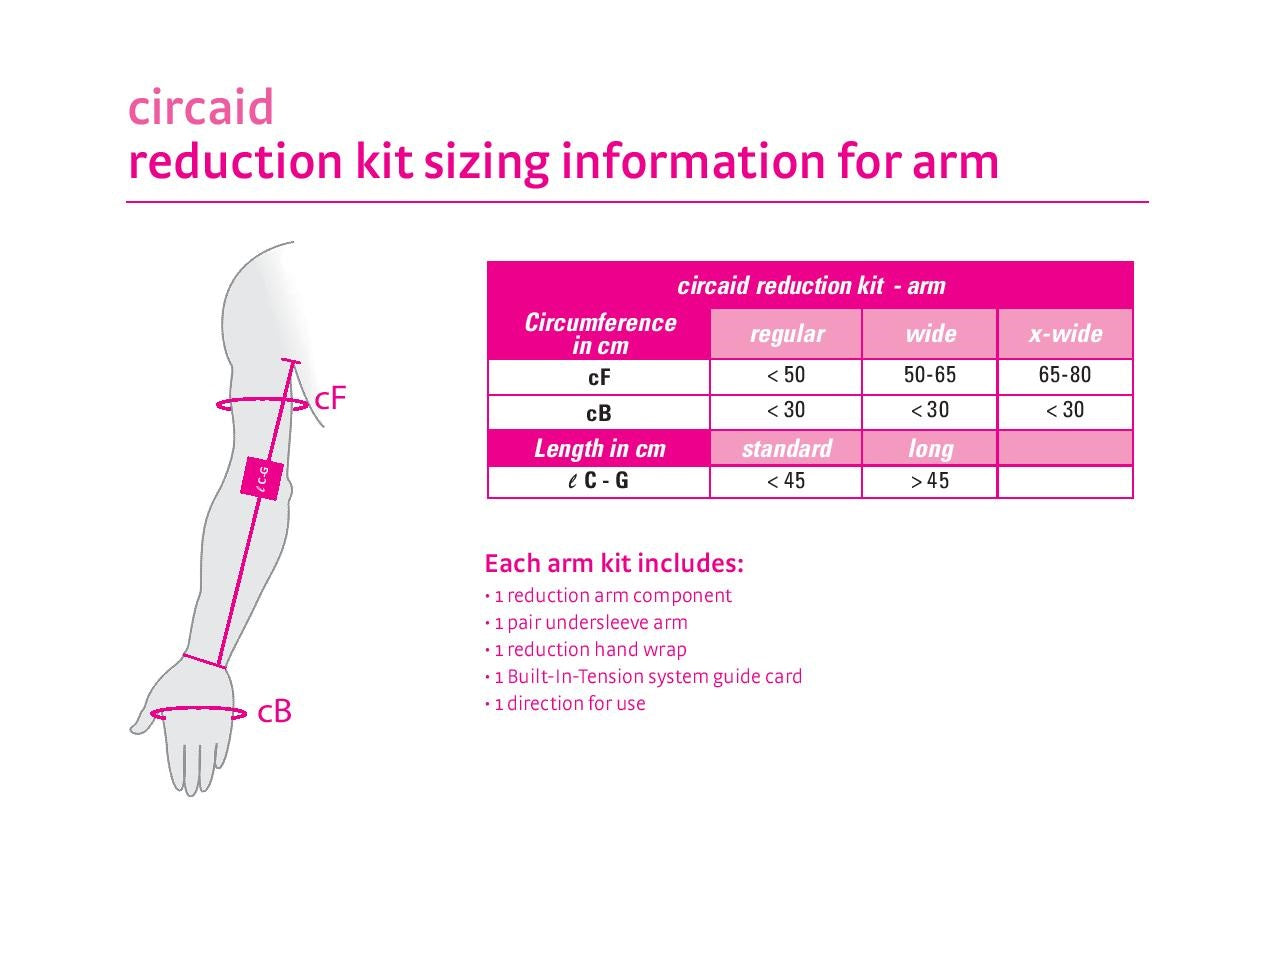 circaid reduction kit arm standard